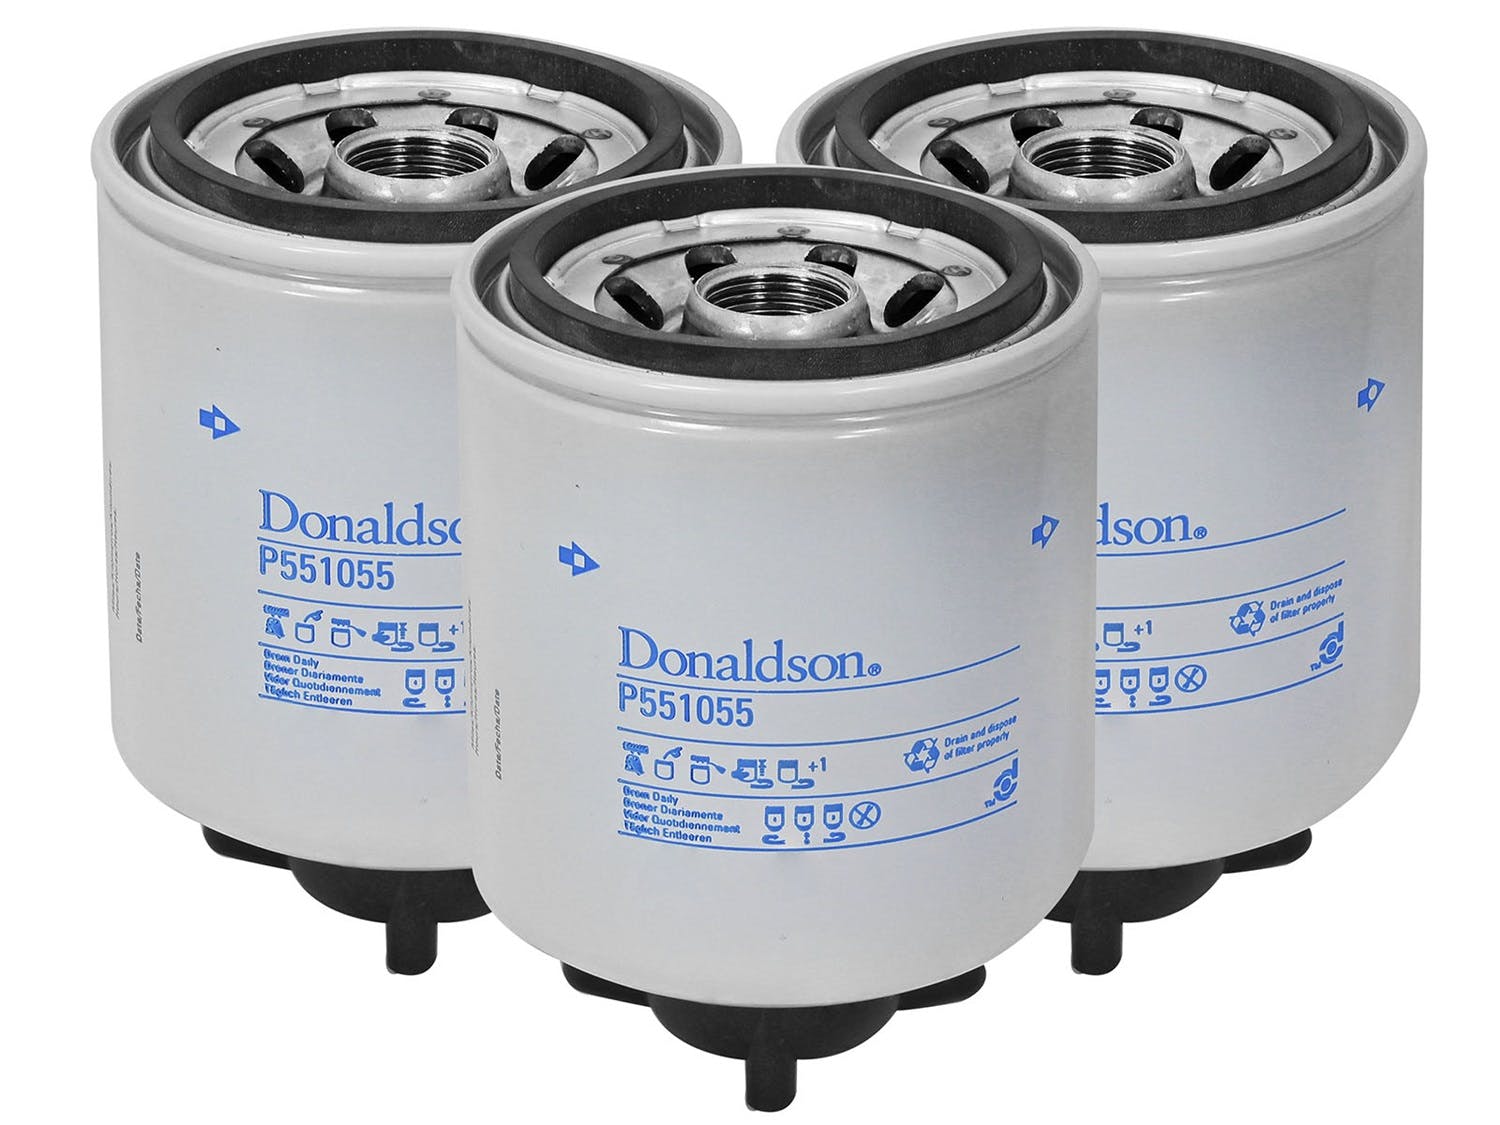 AFE 44-FF018M aFe Power DFS780 Series Donaldson Fuel Filter